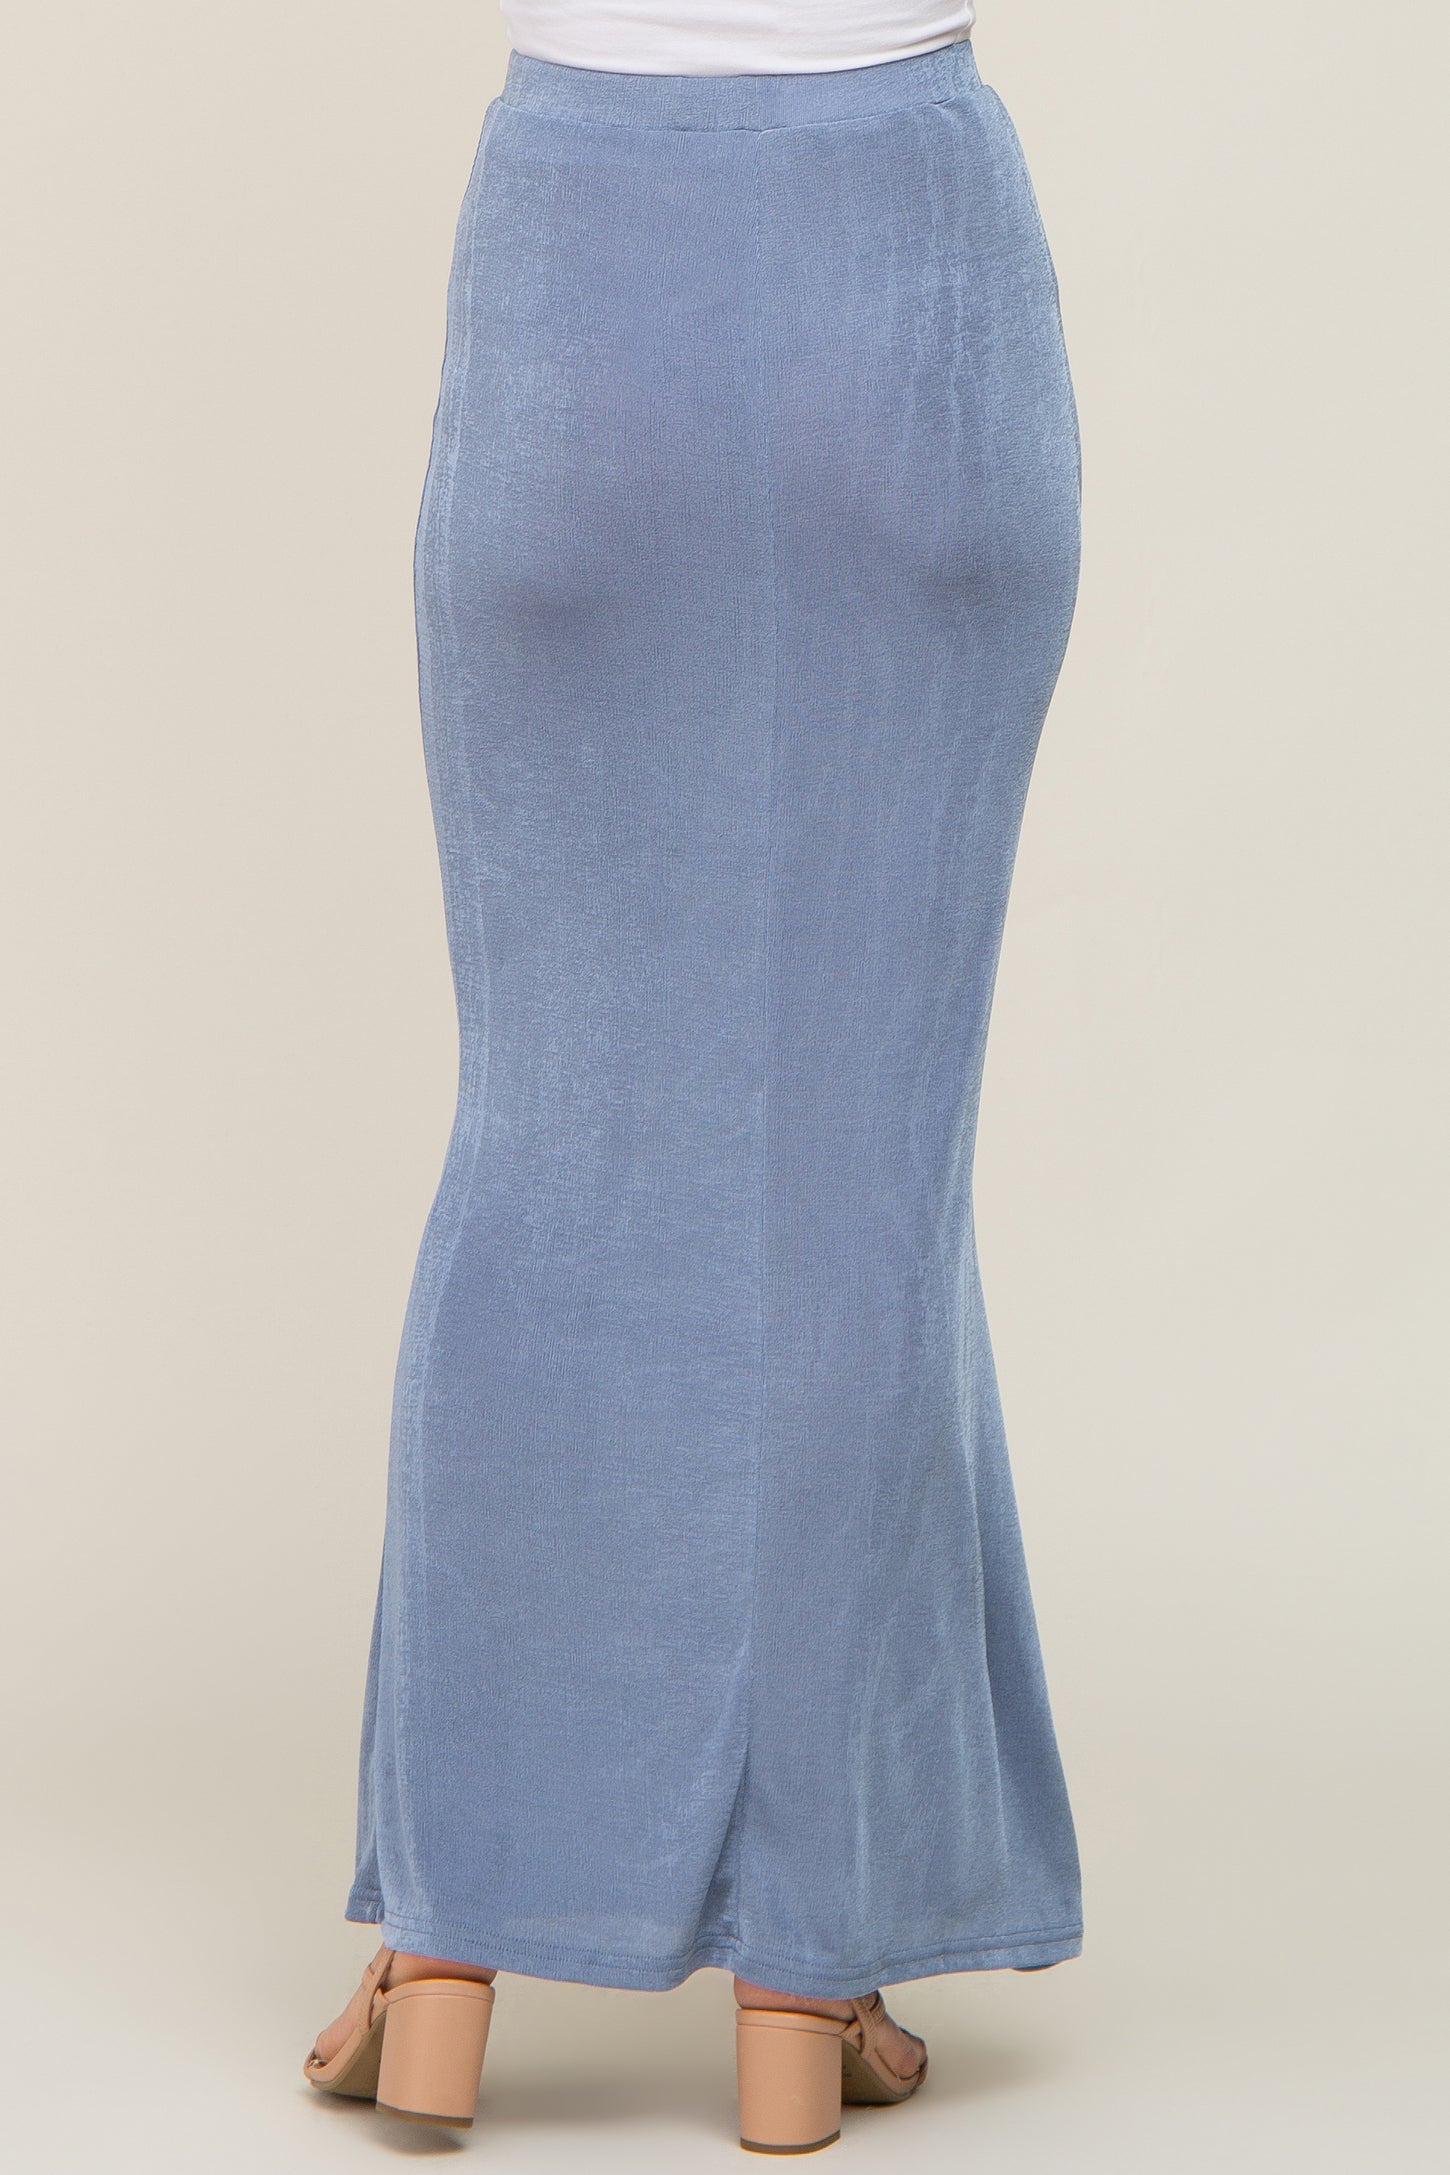 Blue Stretch Knit Maxi Skirt